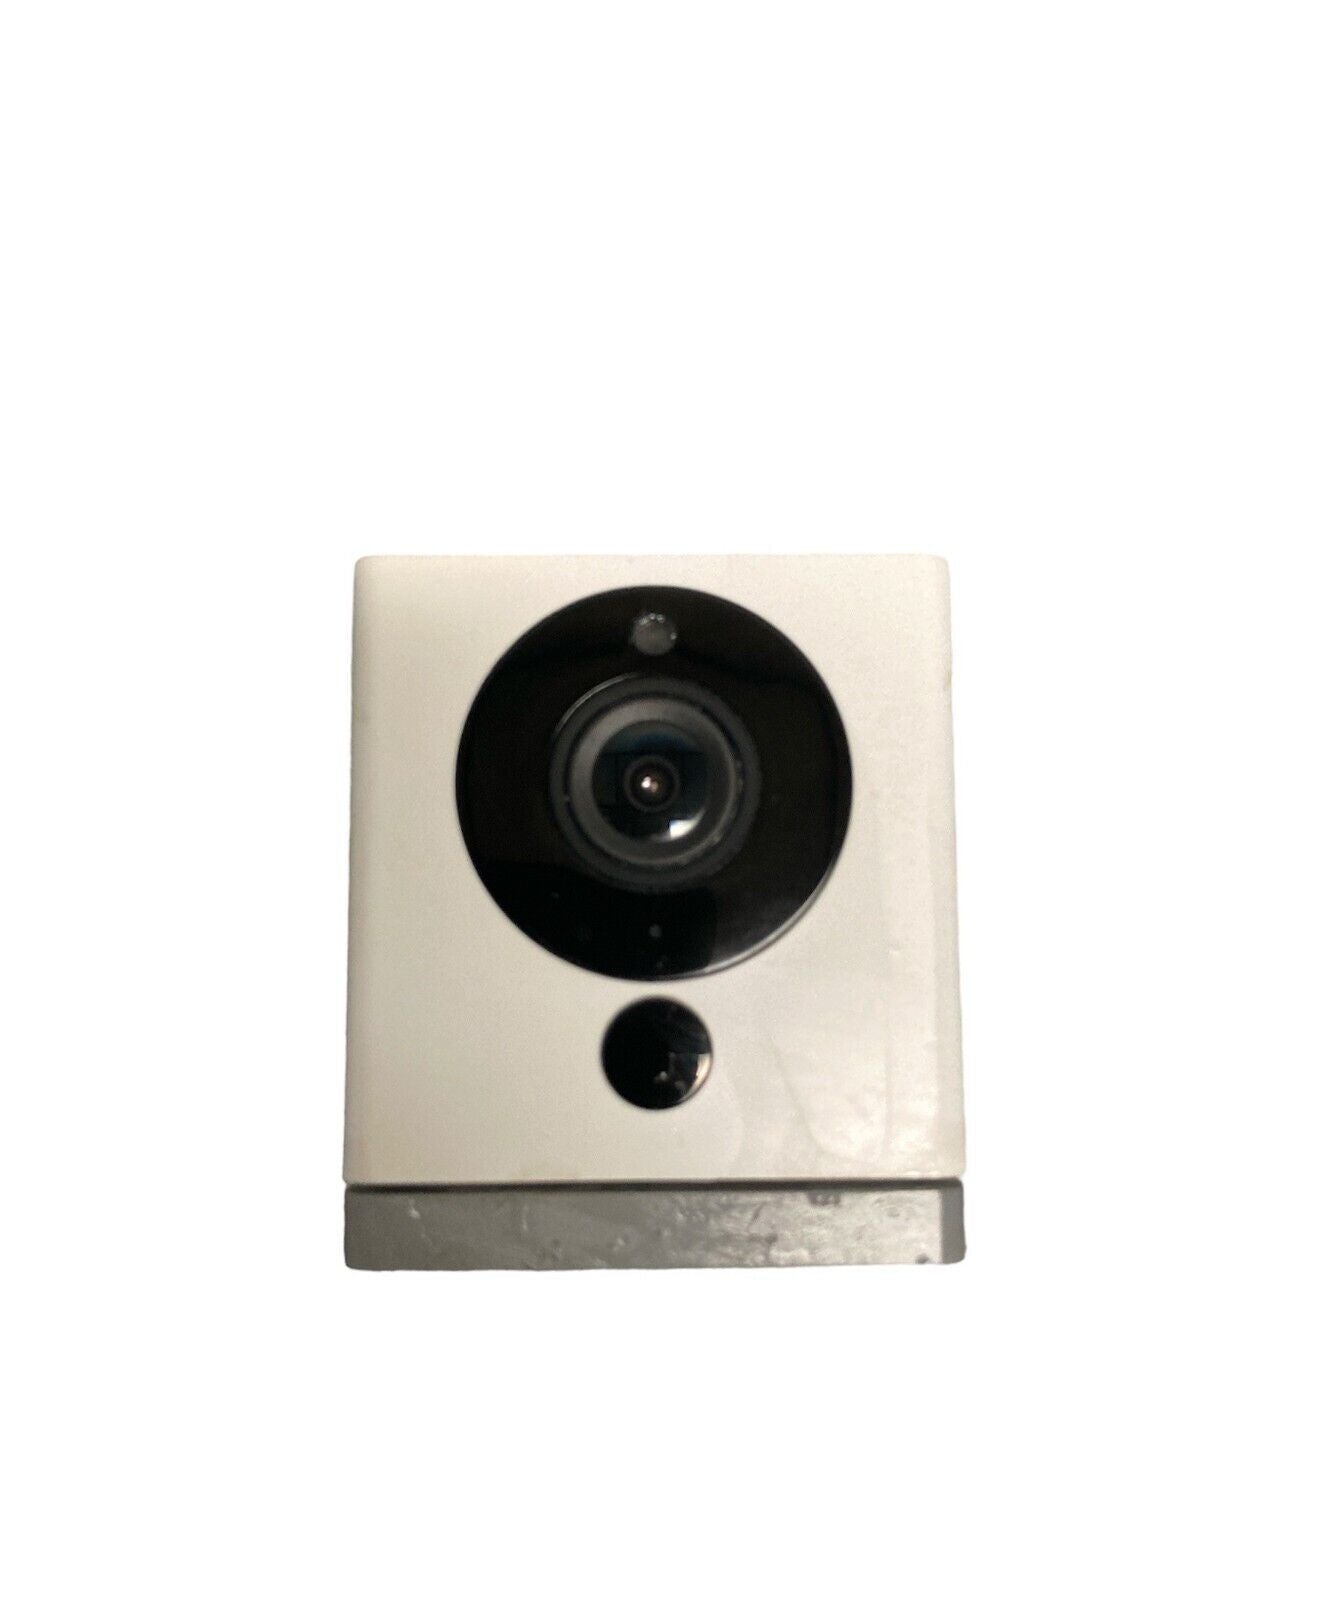 Wyze Cam WYZEC2 1080p HD Indoor Wireless Smart Home Security Camera Night Vision